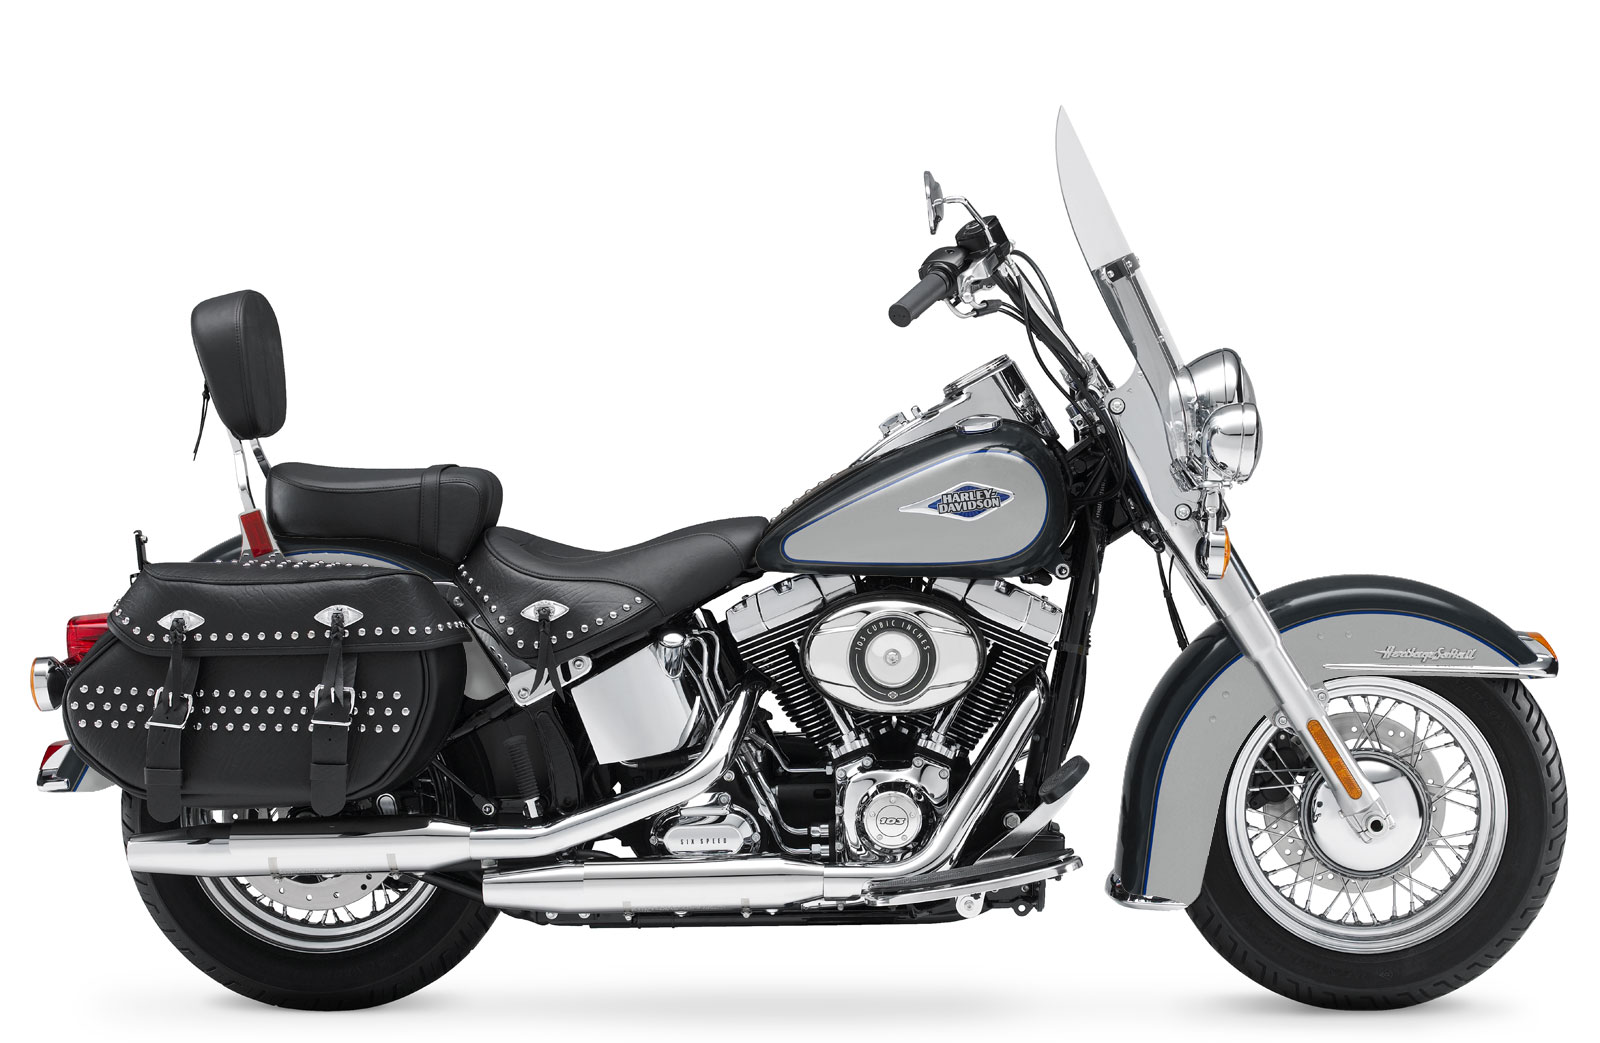 56569 09 Harley Davidson H D Original Handlebar For Heritage Classic 09 15 At Thunderbike Shop